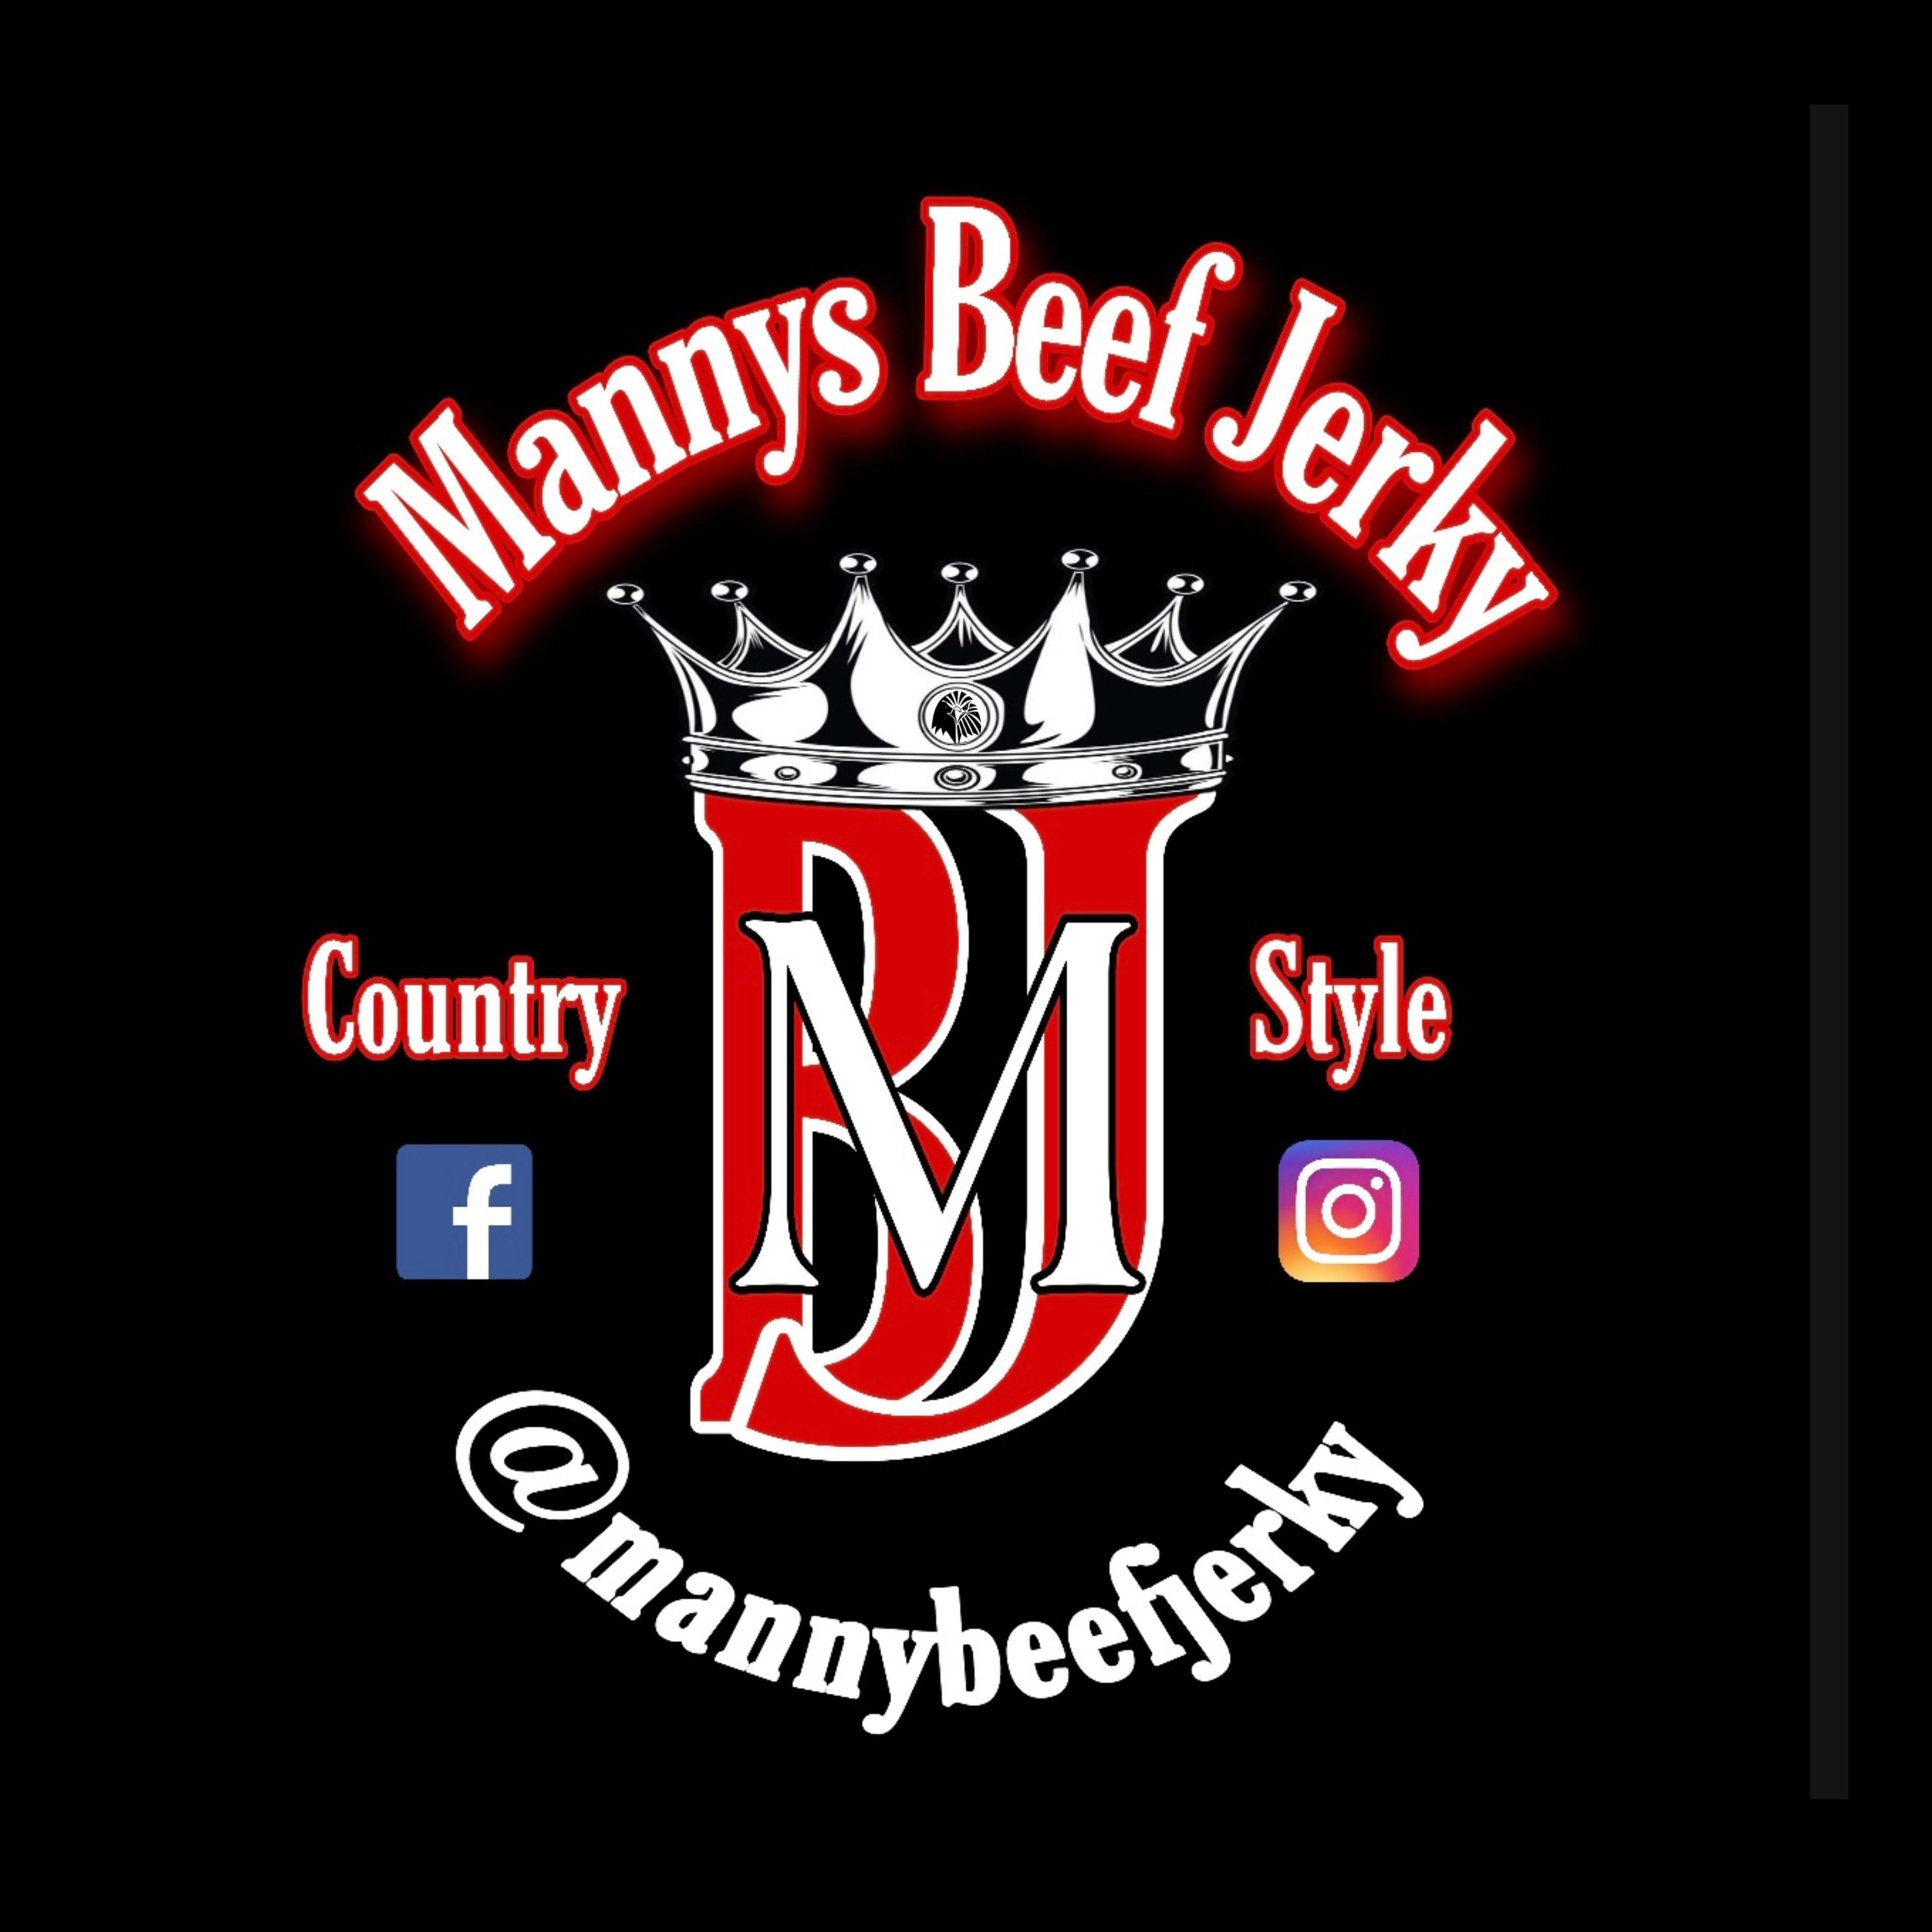 Mannys Beef Jerky